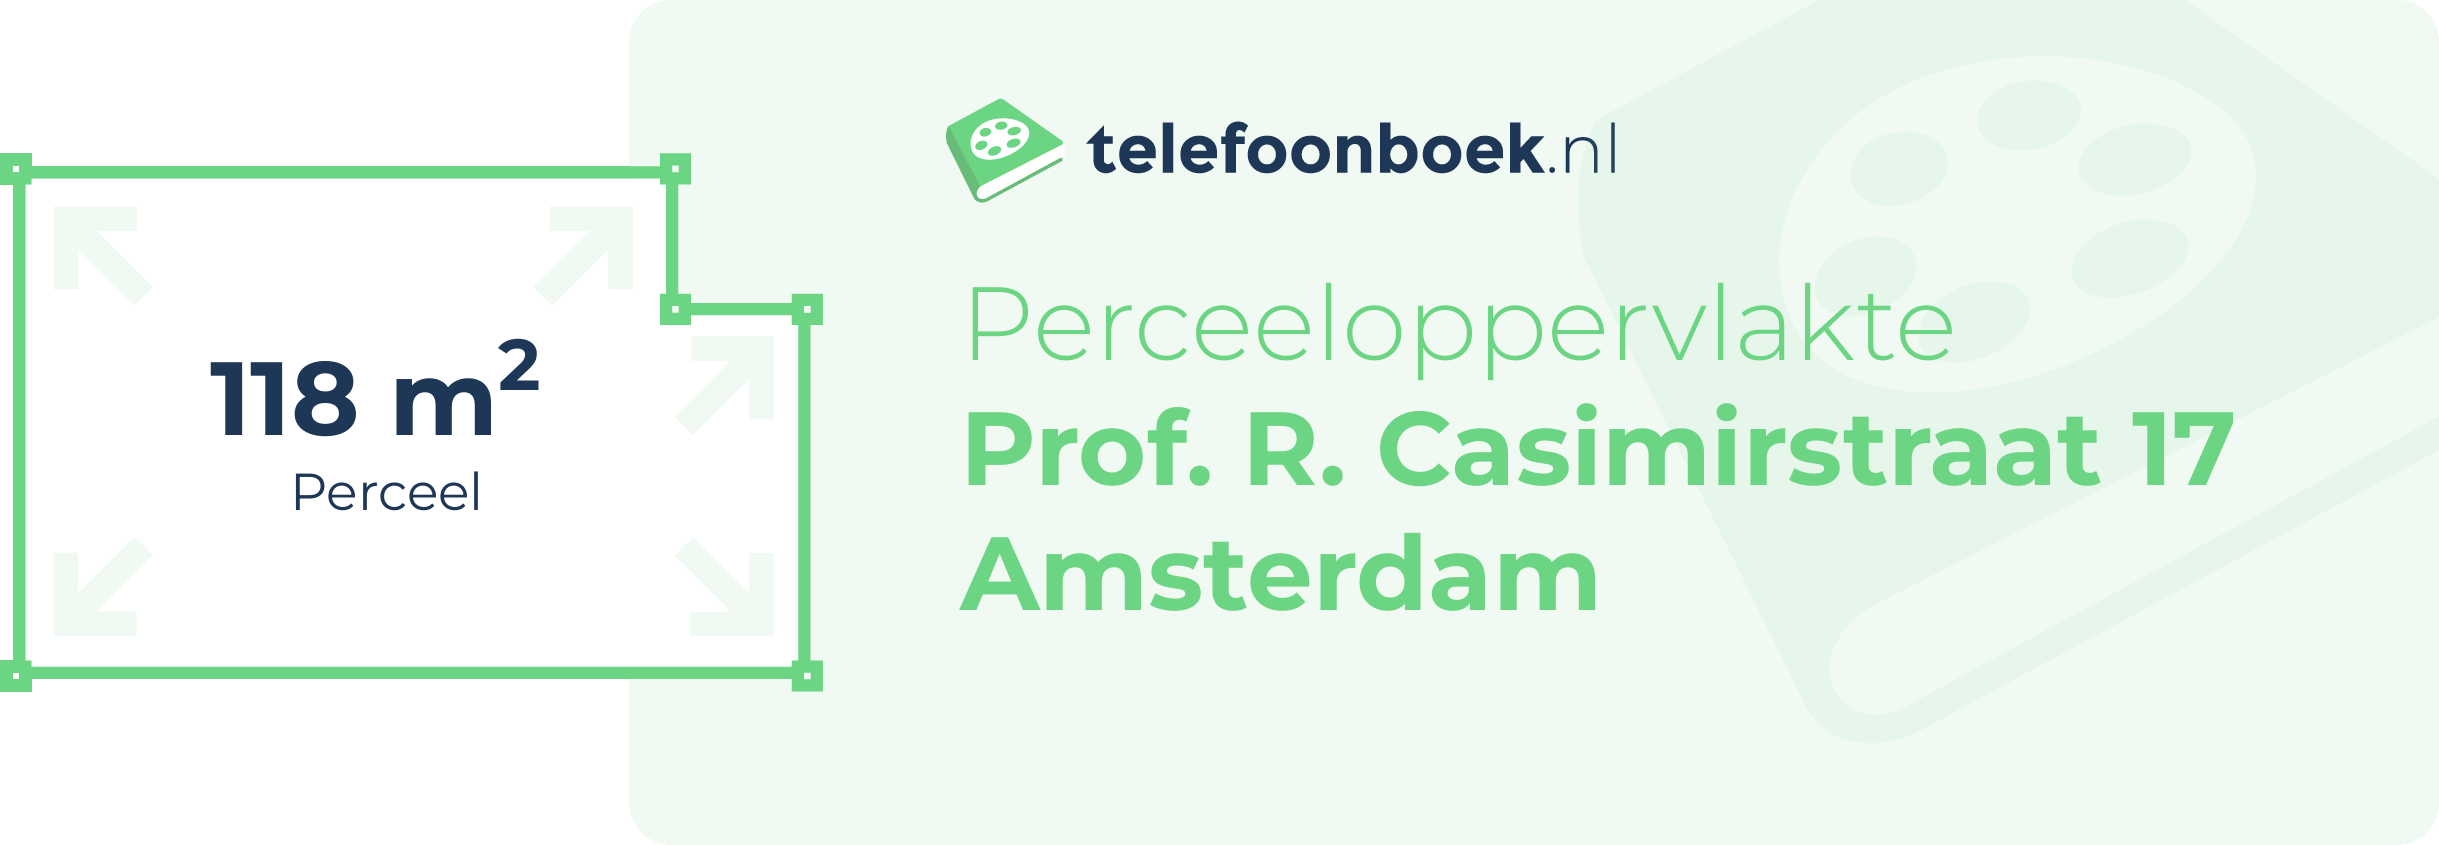 Perceeloppervlakte Prof. R. Casimirstraat 17 Amsterdam